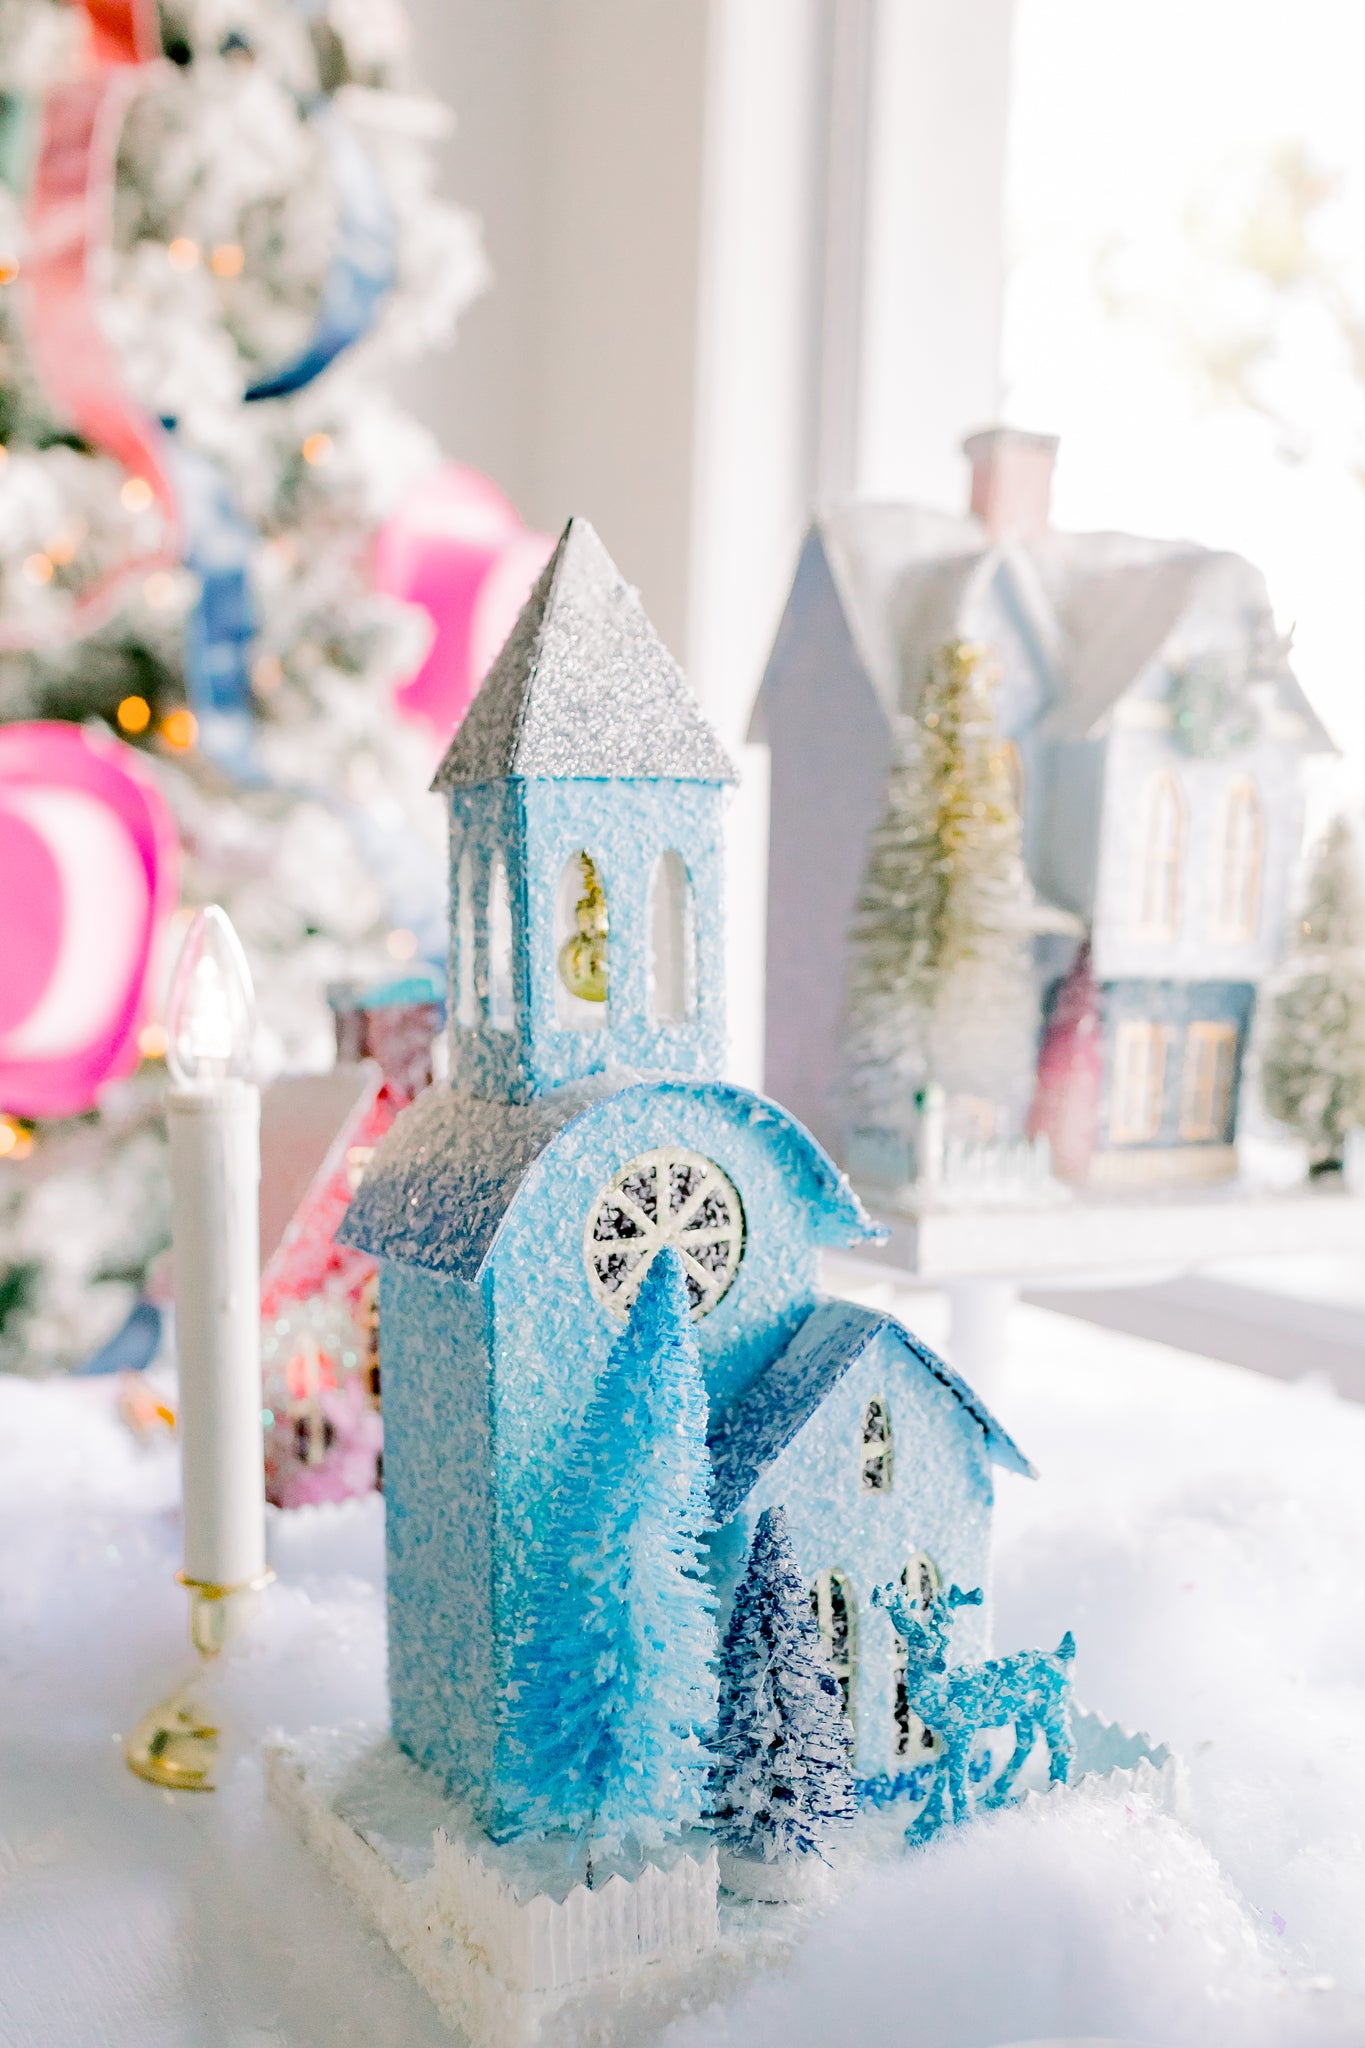 Mini Christmas church in a darling festive village.